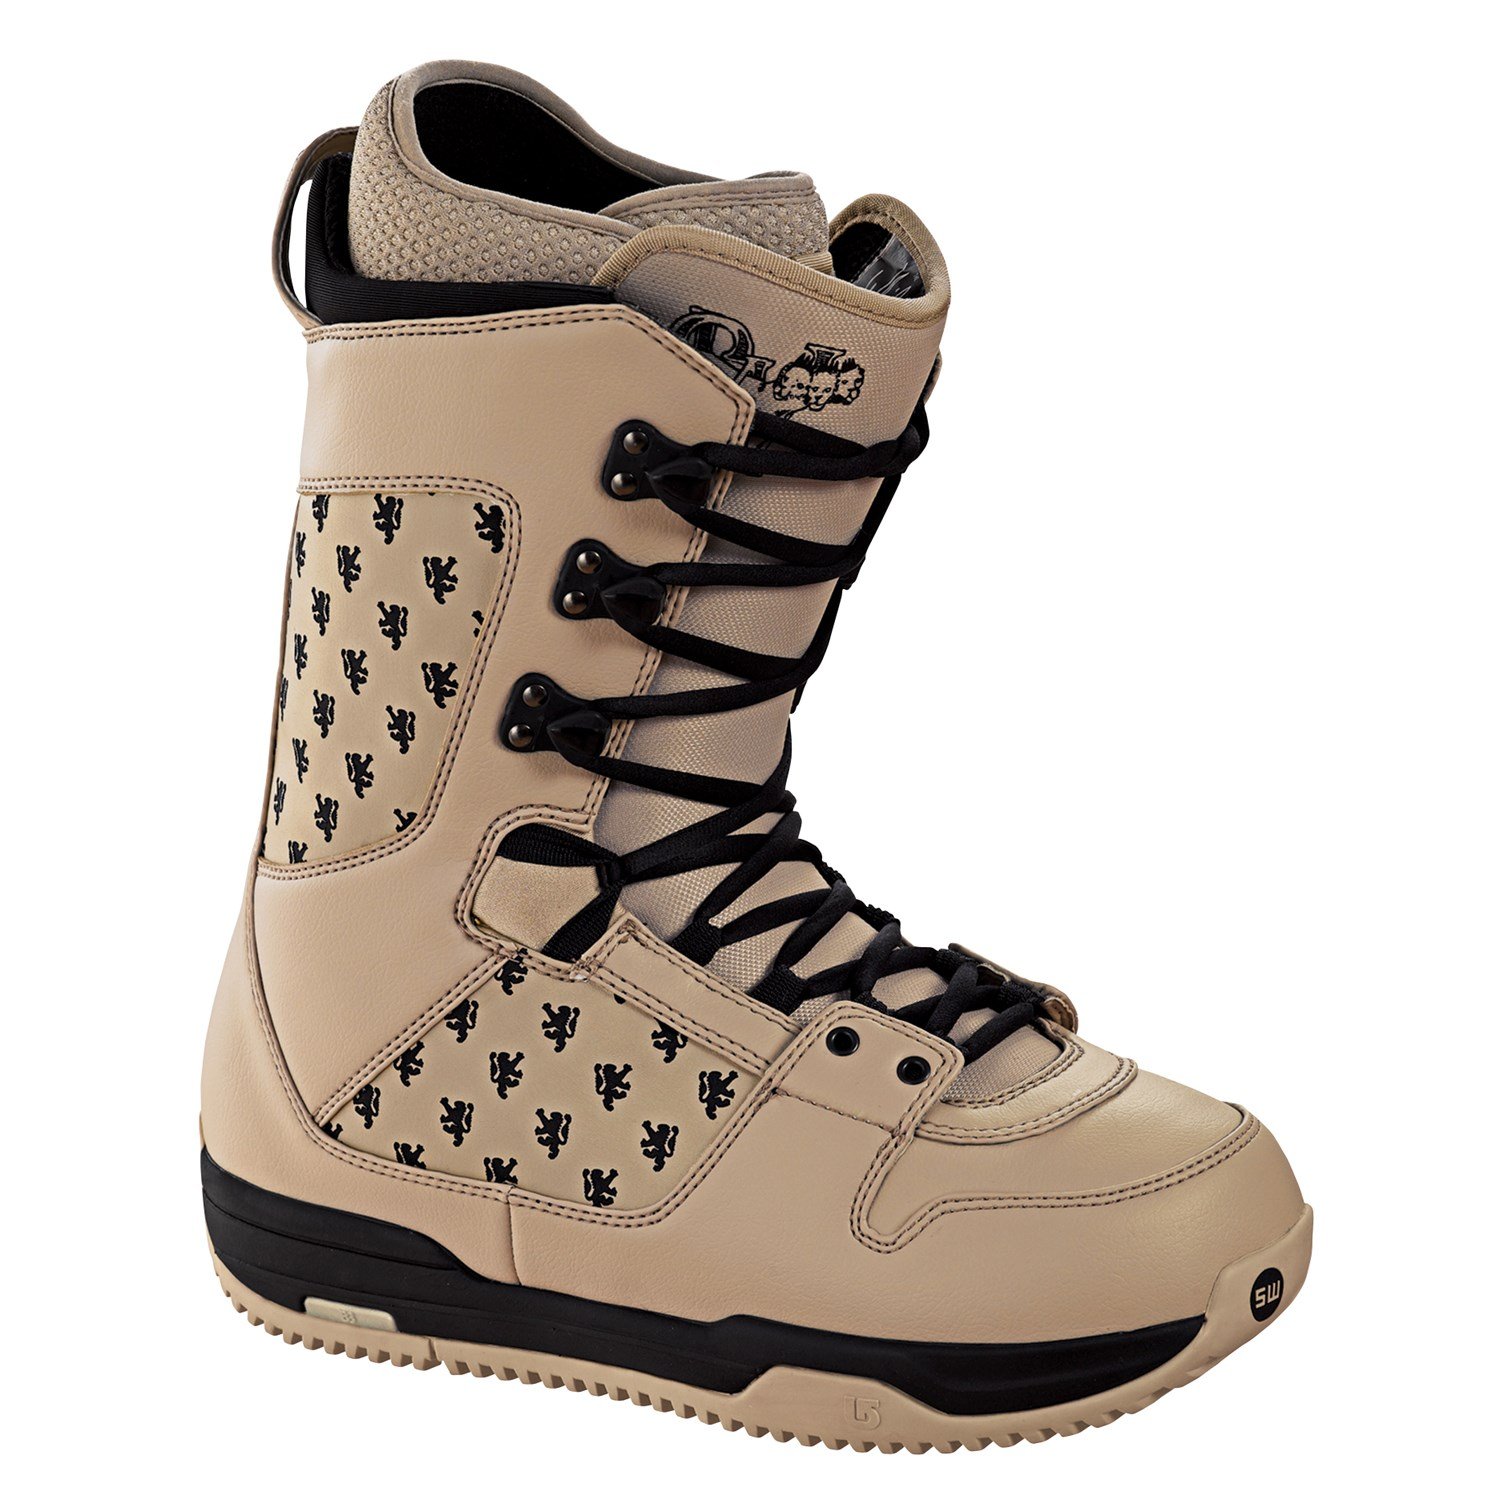 NEW! $280 Burton Shaun White Snowboard Boots! US 6 UK 5 Mondo 24